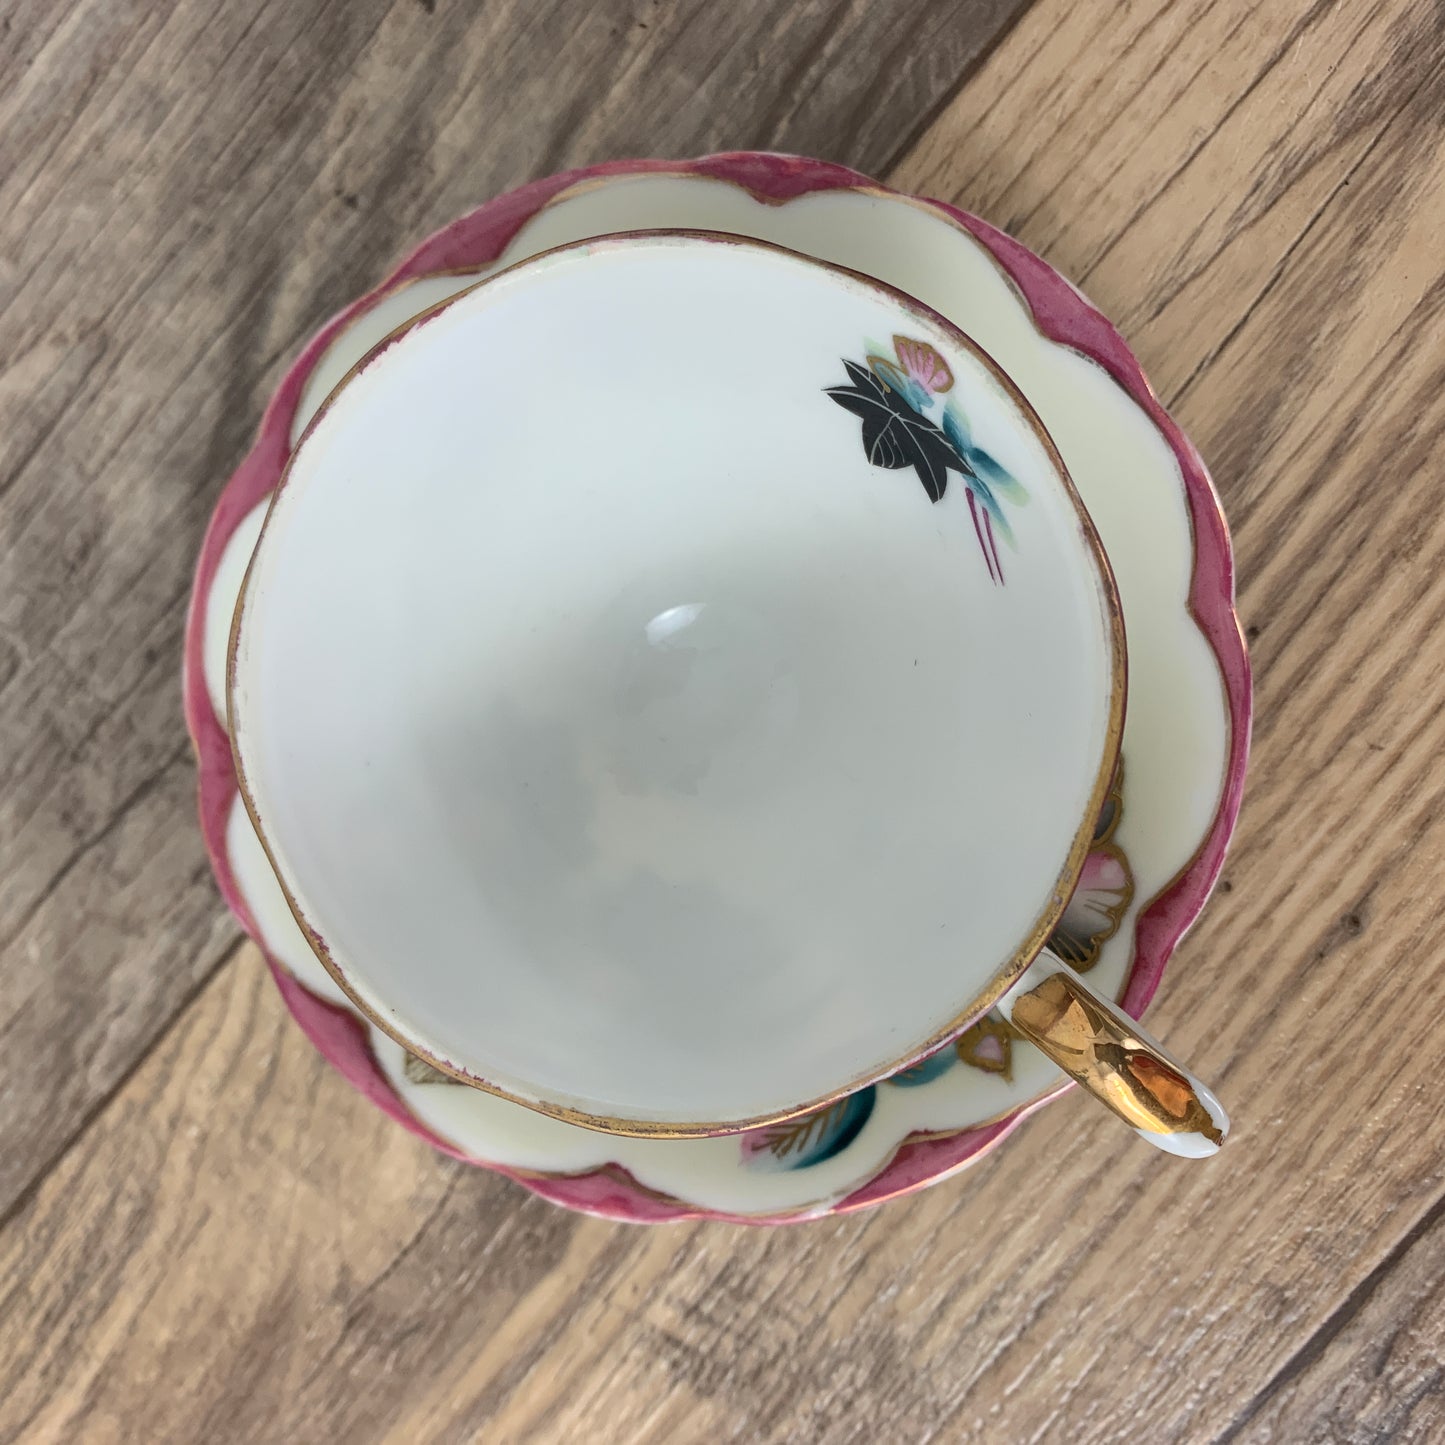 Trimont China Hand Painted Teacup-Vintage Teacups-Occupied Japan Teacup and Saucer-Vintage Tea Cup-Hand Painted Purple Floral Teacups